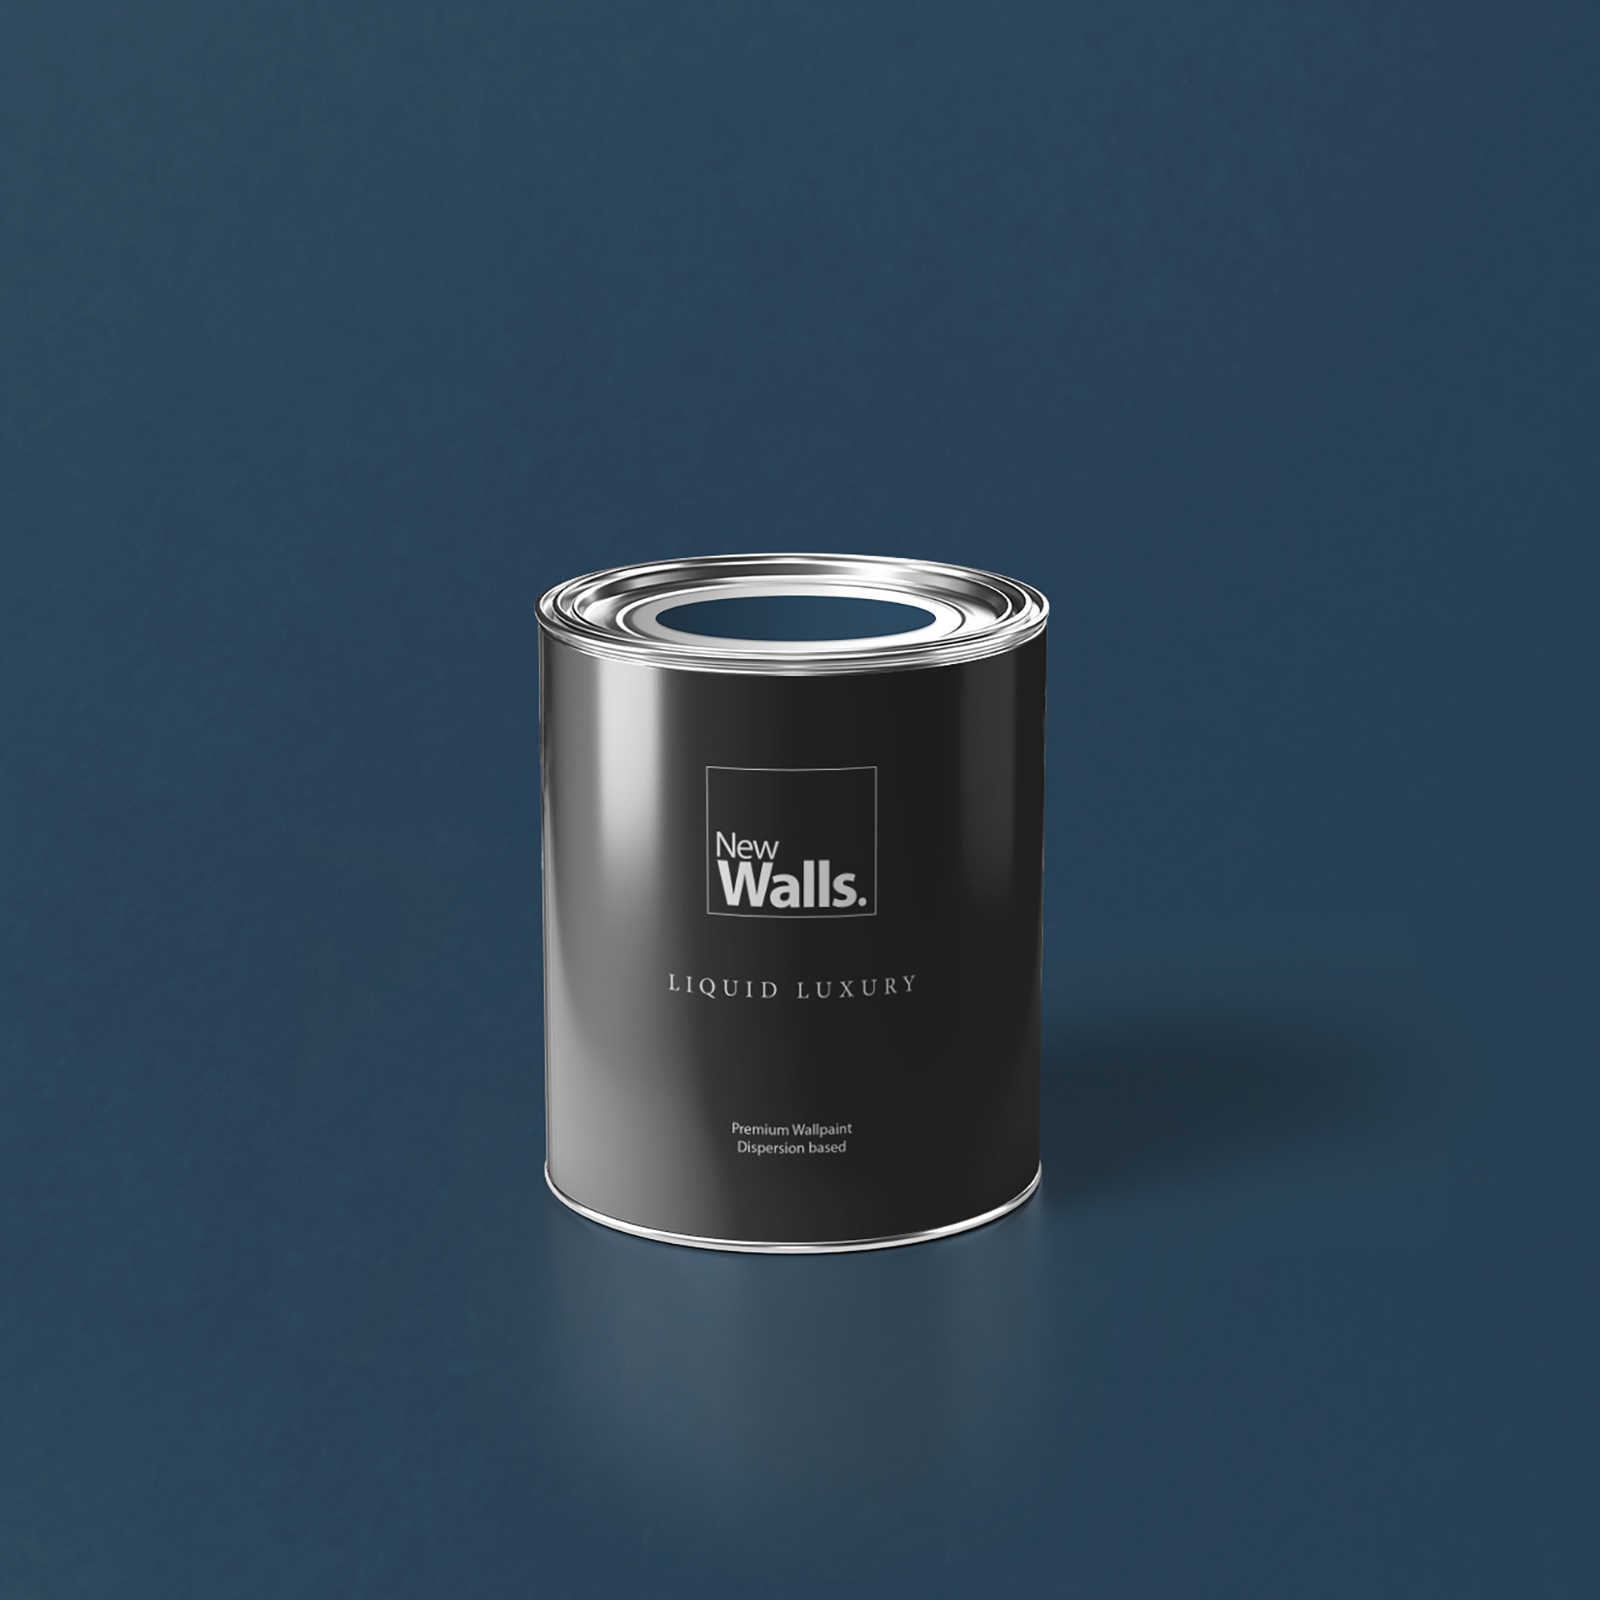         Premium Wandfarbe edles Dunkelblau »Blissful Blue« NW308 – 1 Liter
    